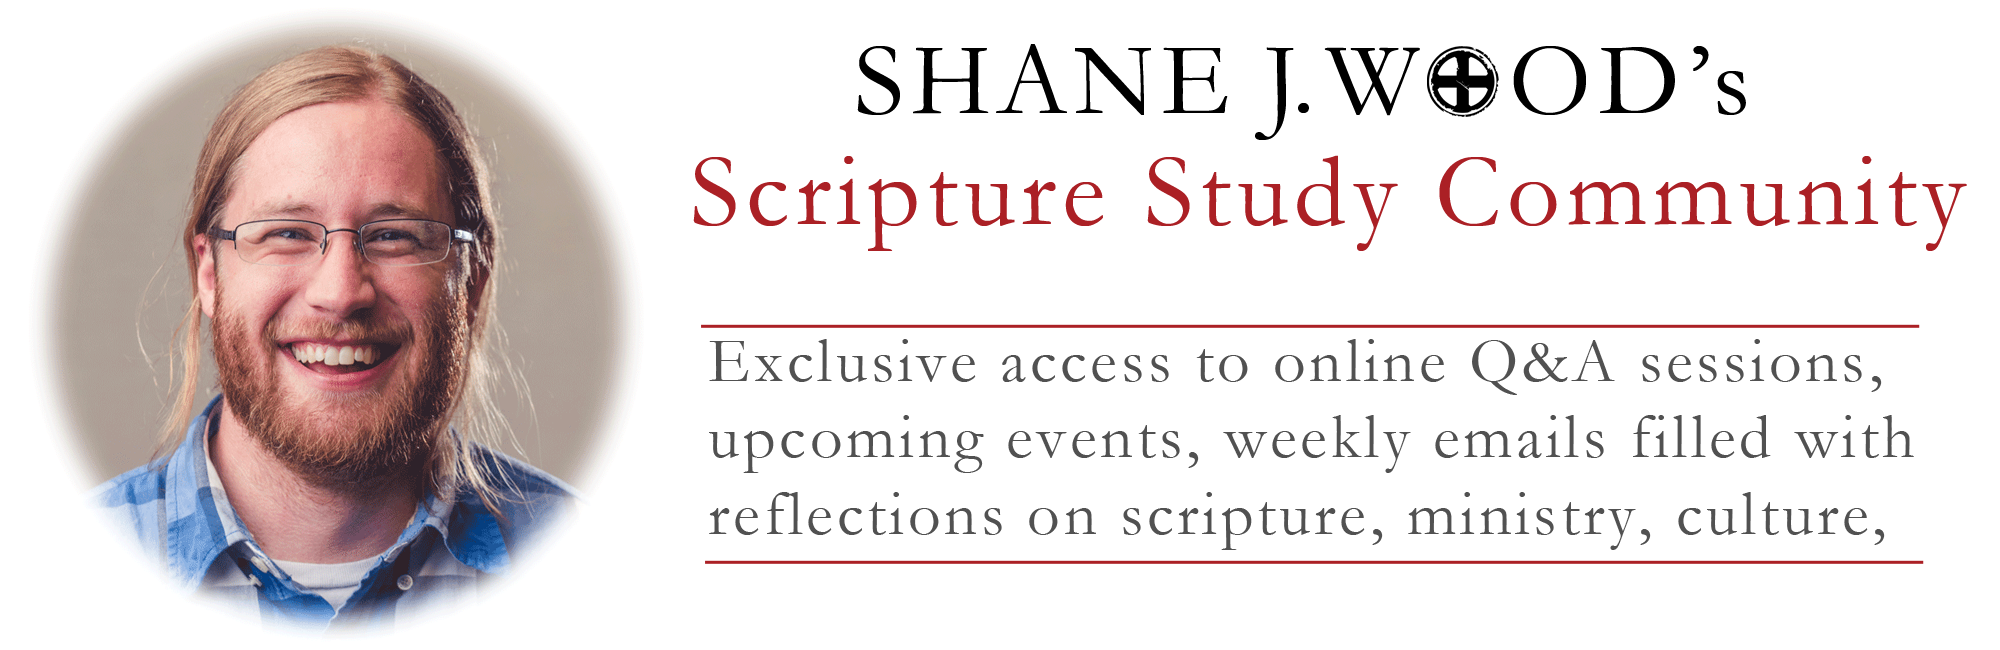 Shane's Scripture Study Community